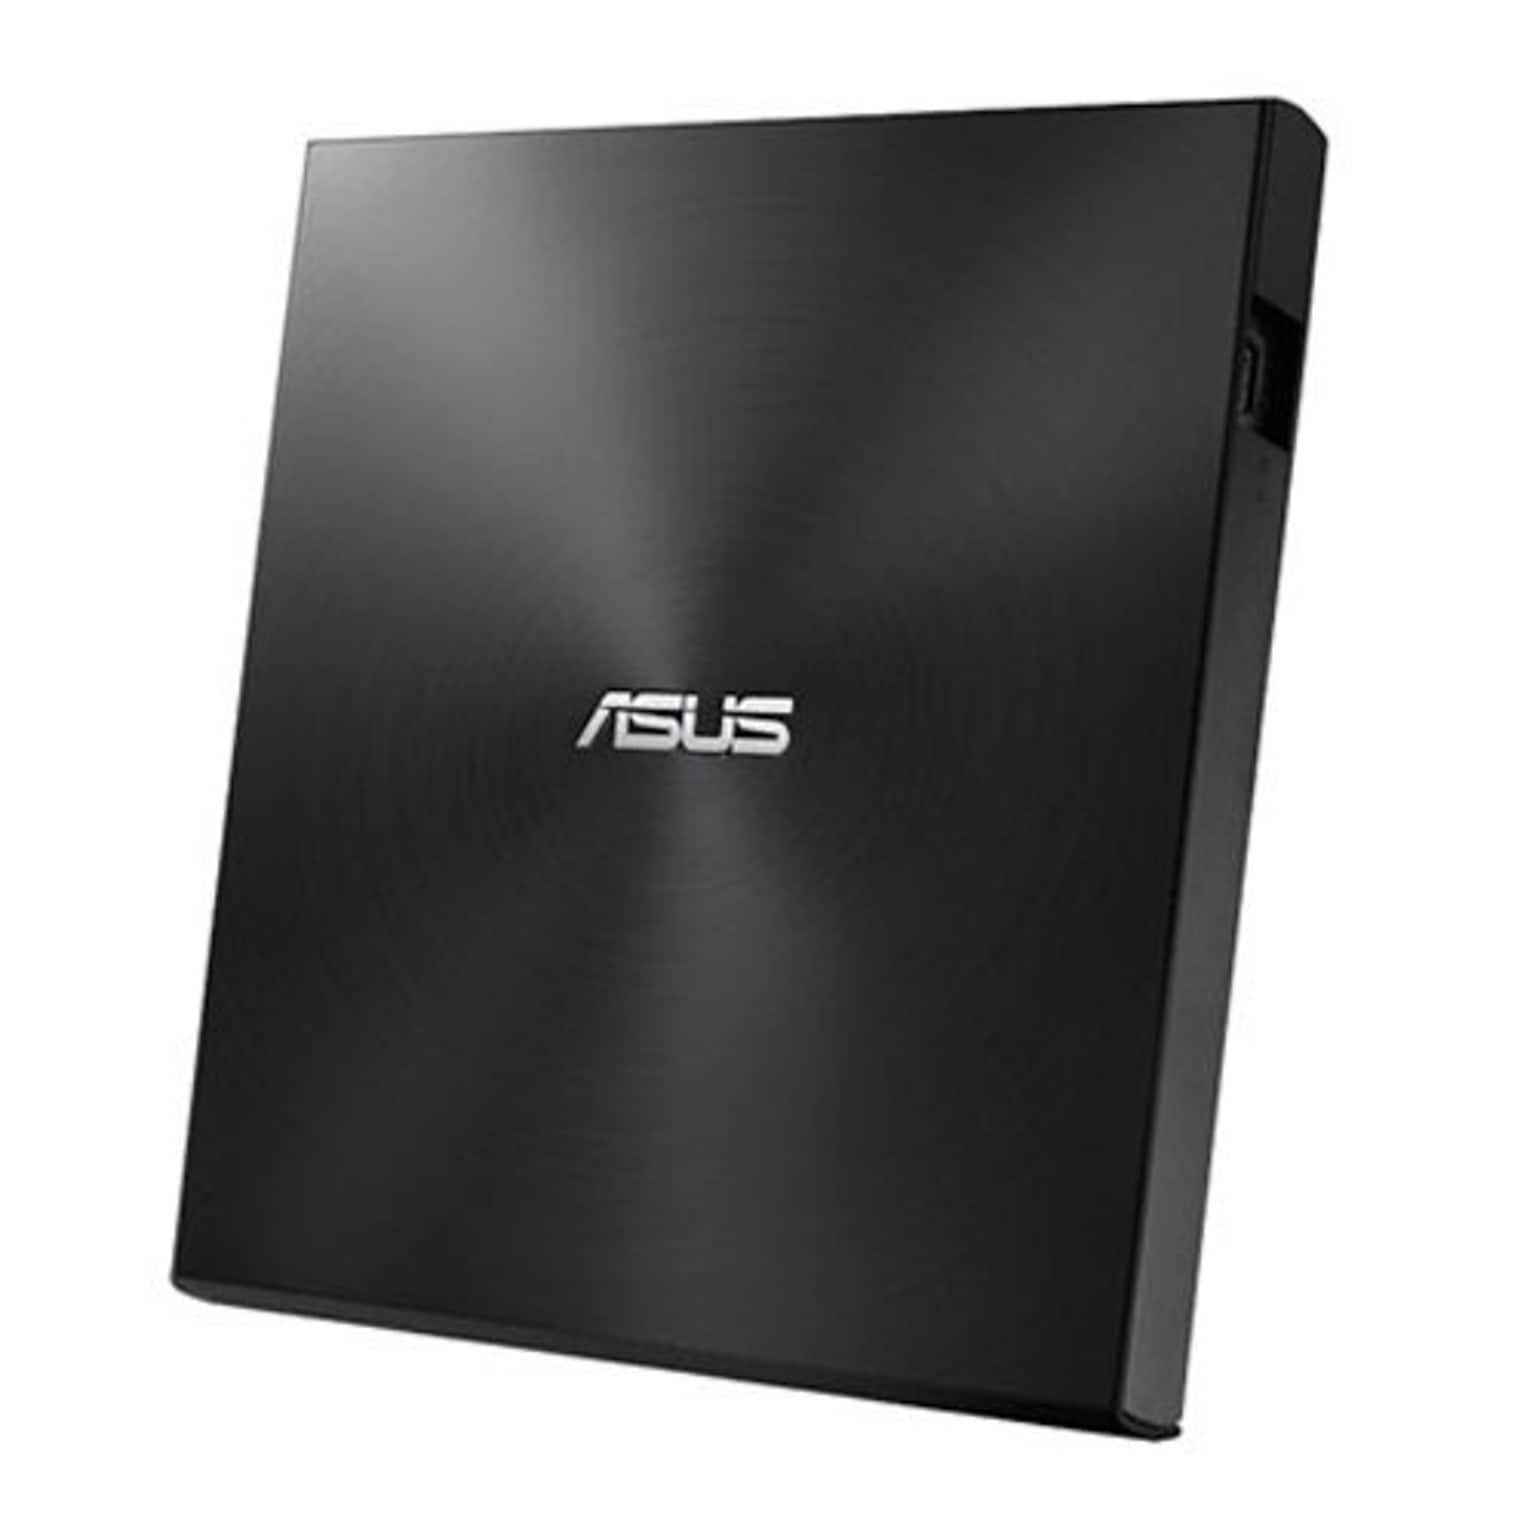 ASUS® SDRW08U7MUBLKGA Ultra-Slim External DVD-Writer, USB 2.0, Black/Silver